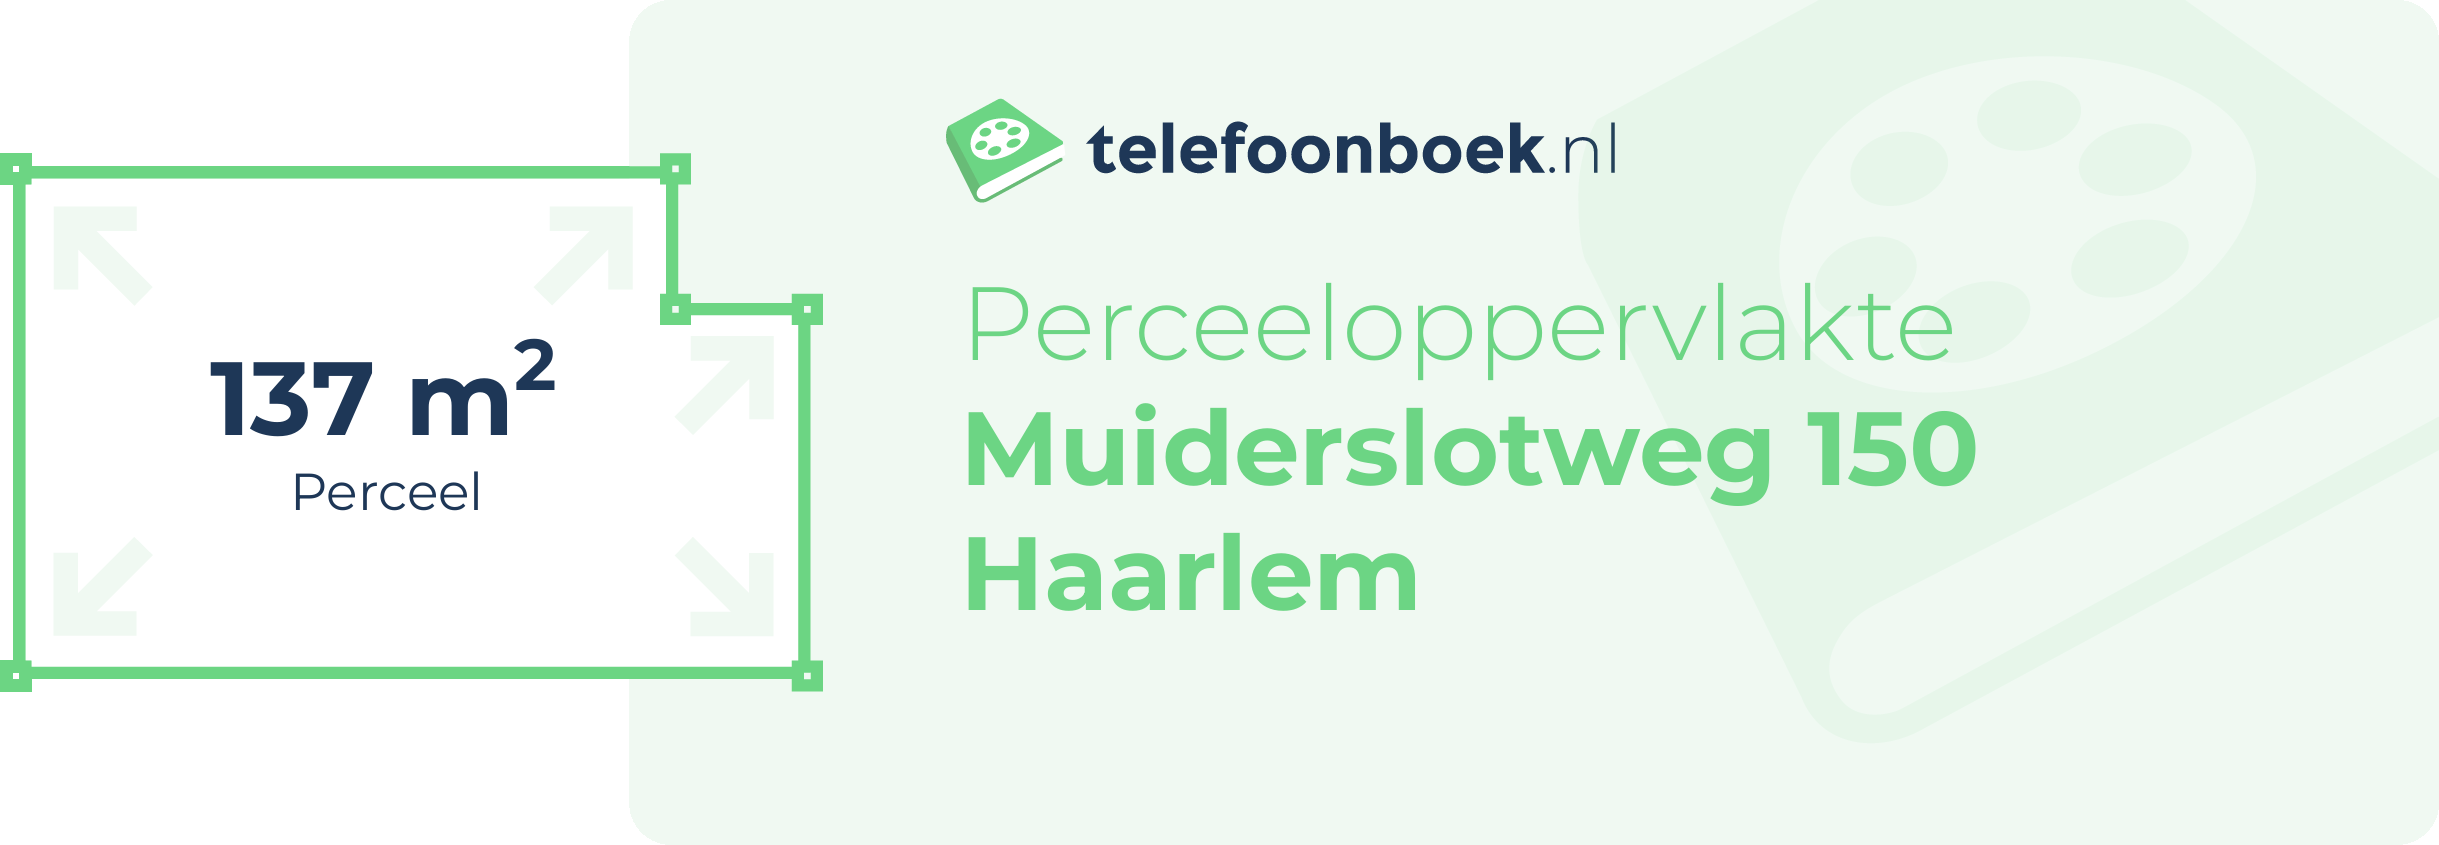 Perceeloppervlakte Muiderslotweg 150 Haarlem